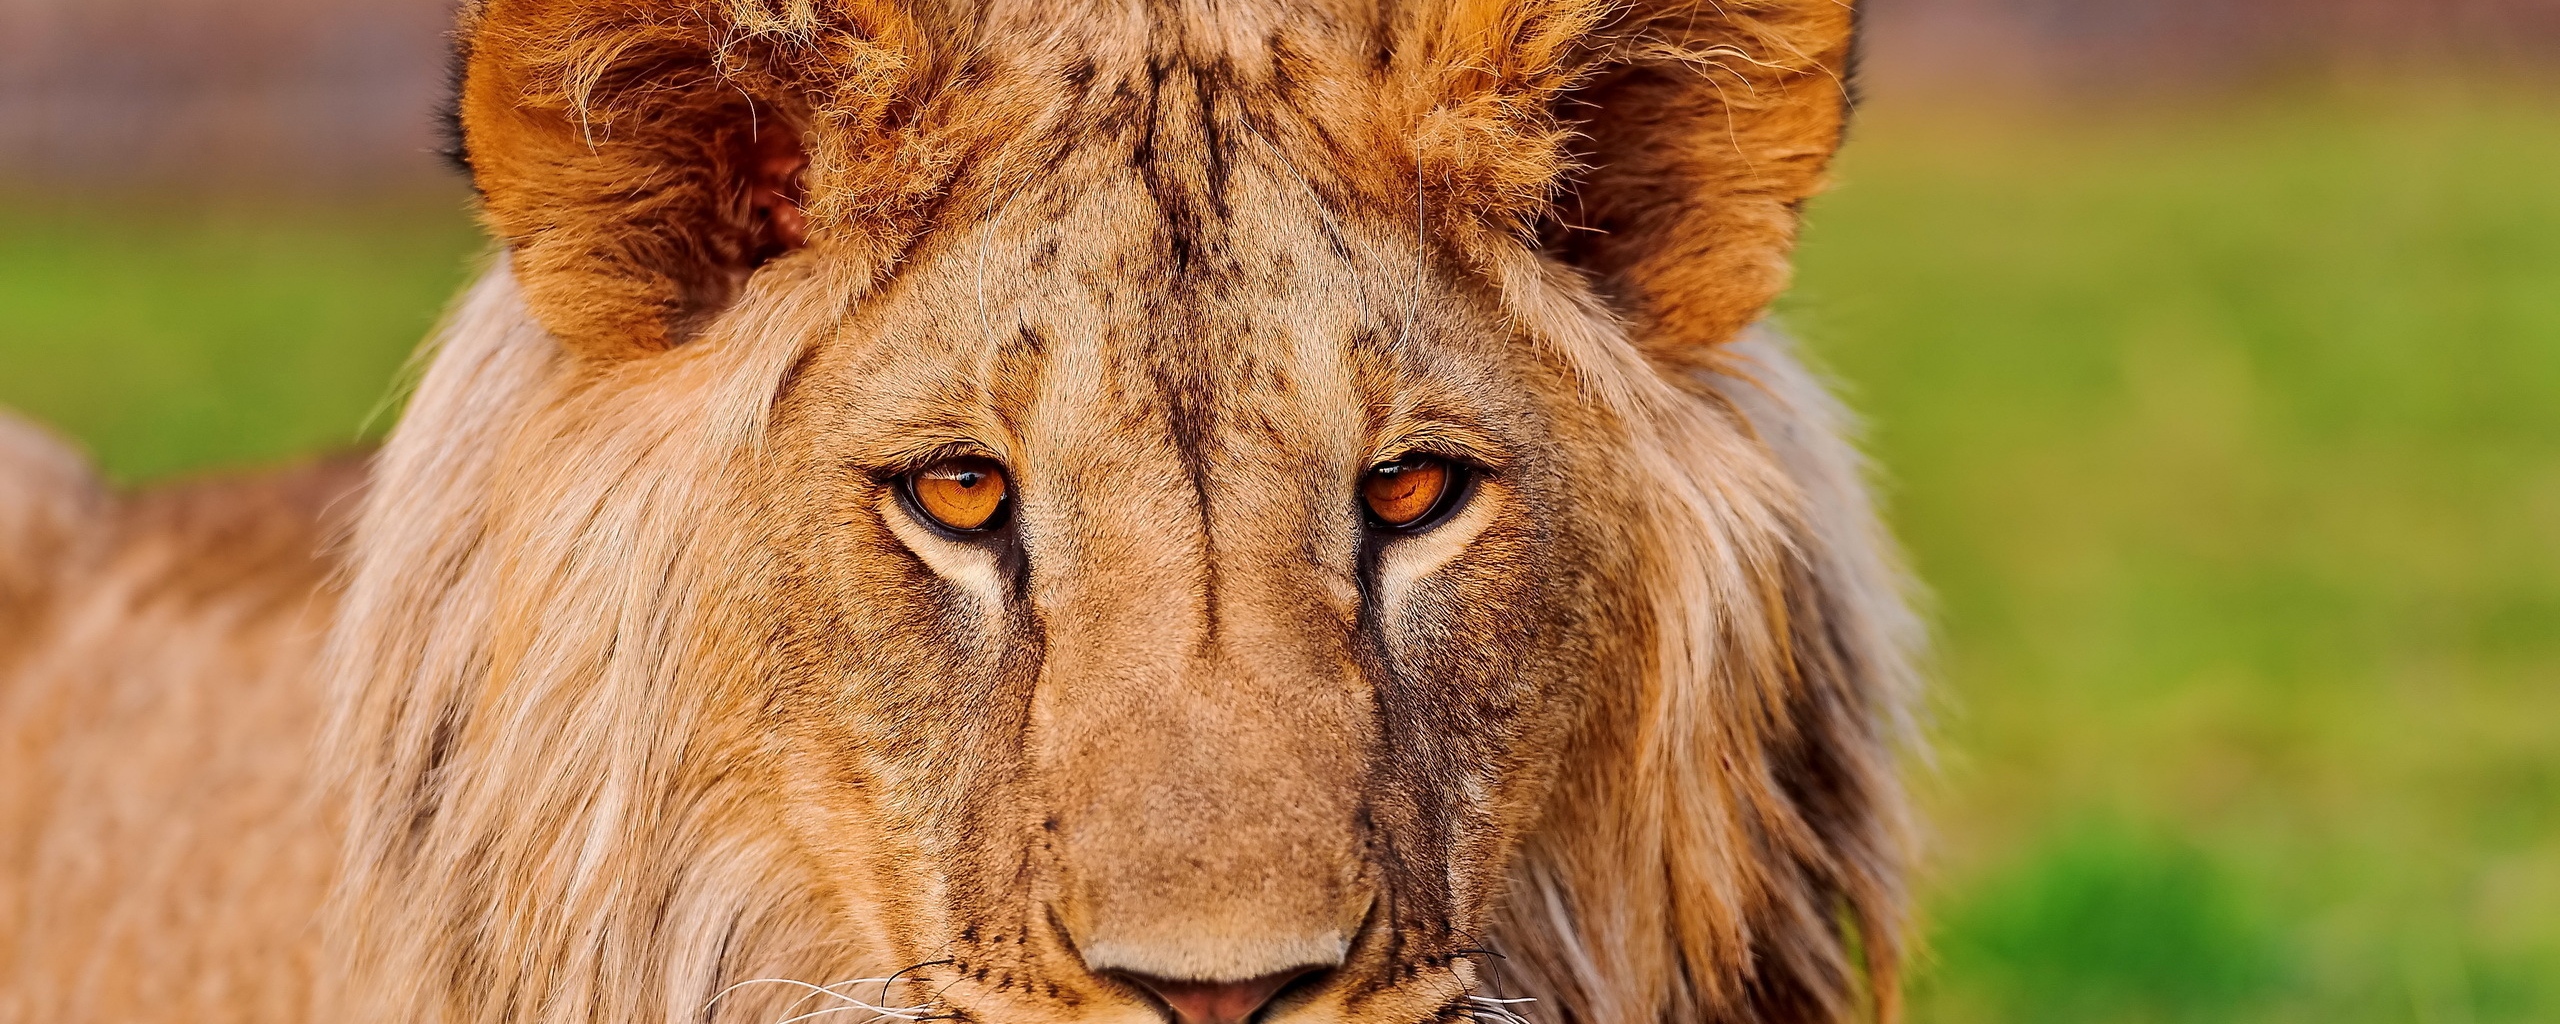 Wallpaper Lion, Face, Eye, Predator - Lions Hd Wallpaper For Iphone 6 - HD Wallpaper 